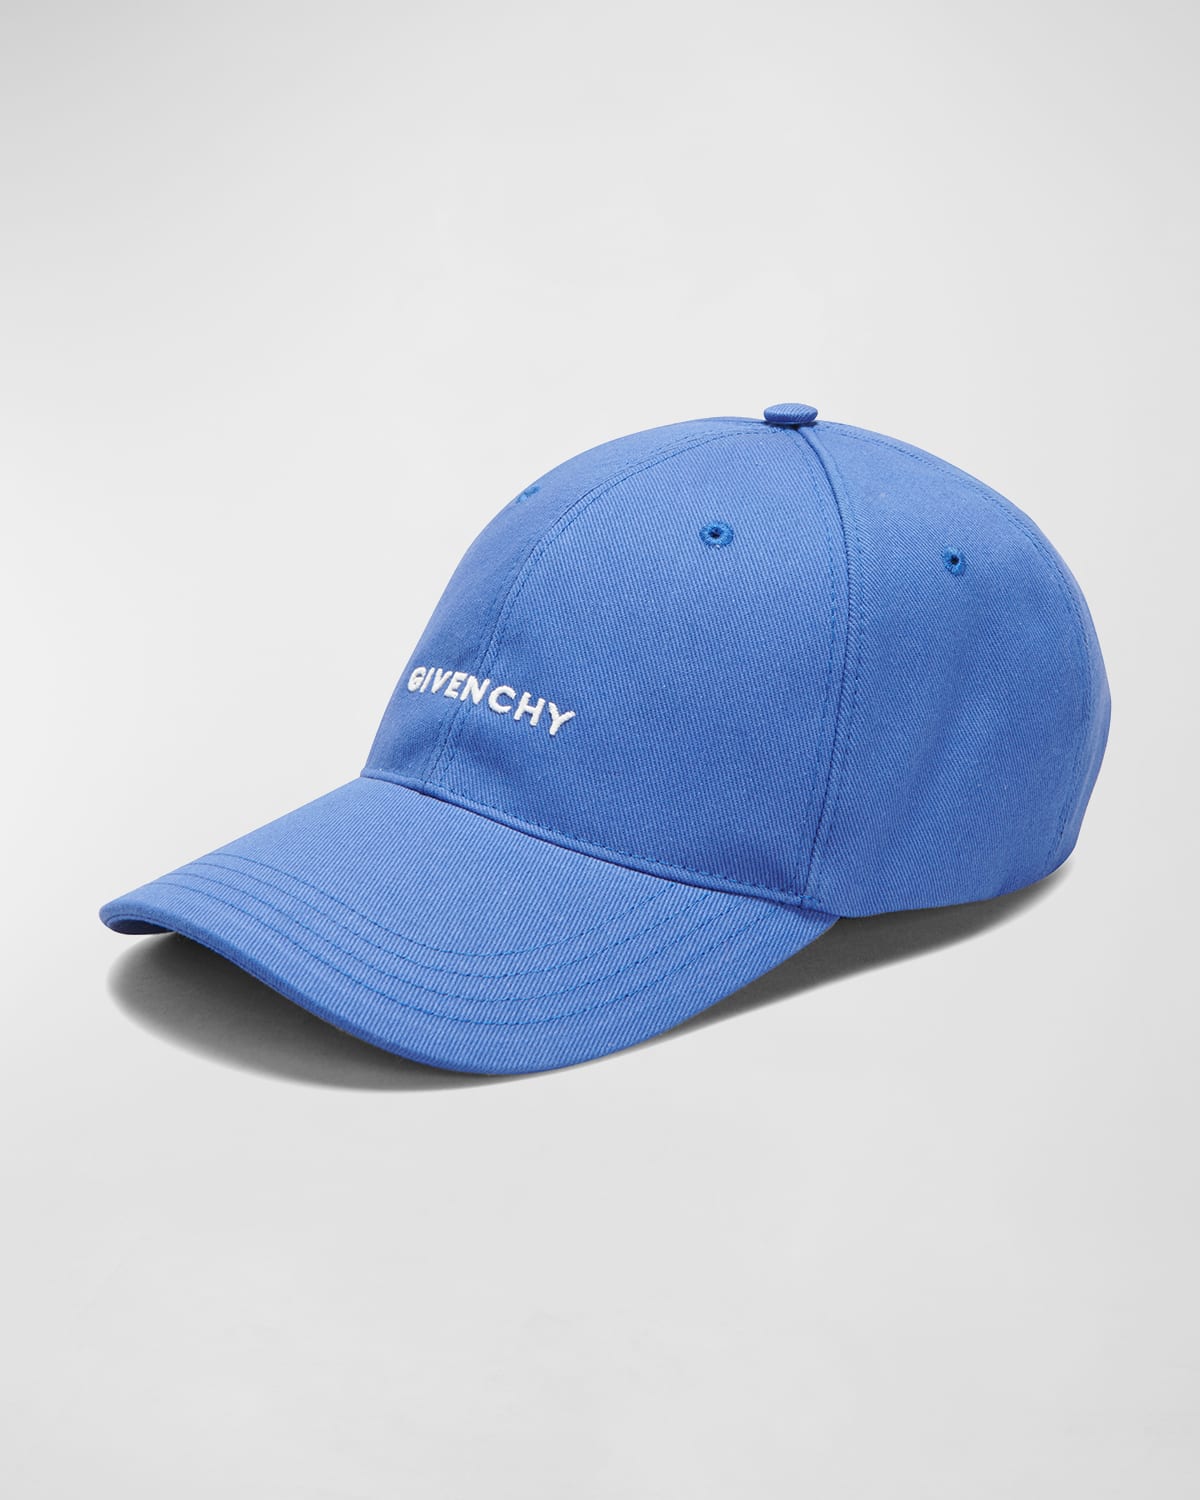 Givenchy Men's Embroidered-logo Baseball Cap In Ocean Blue